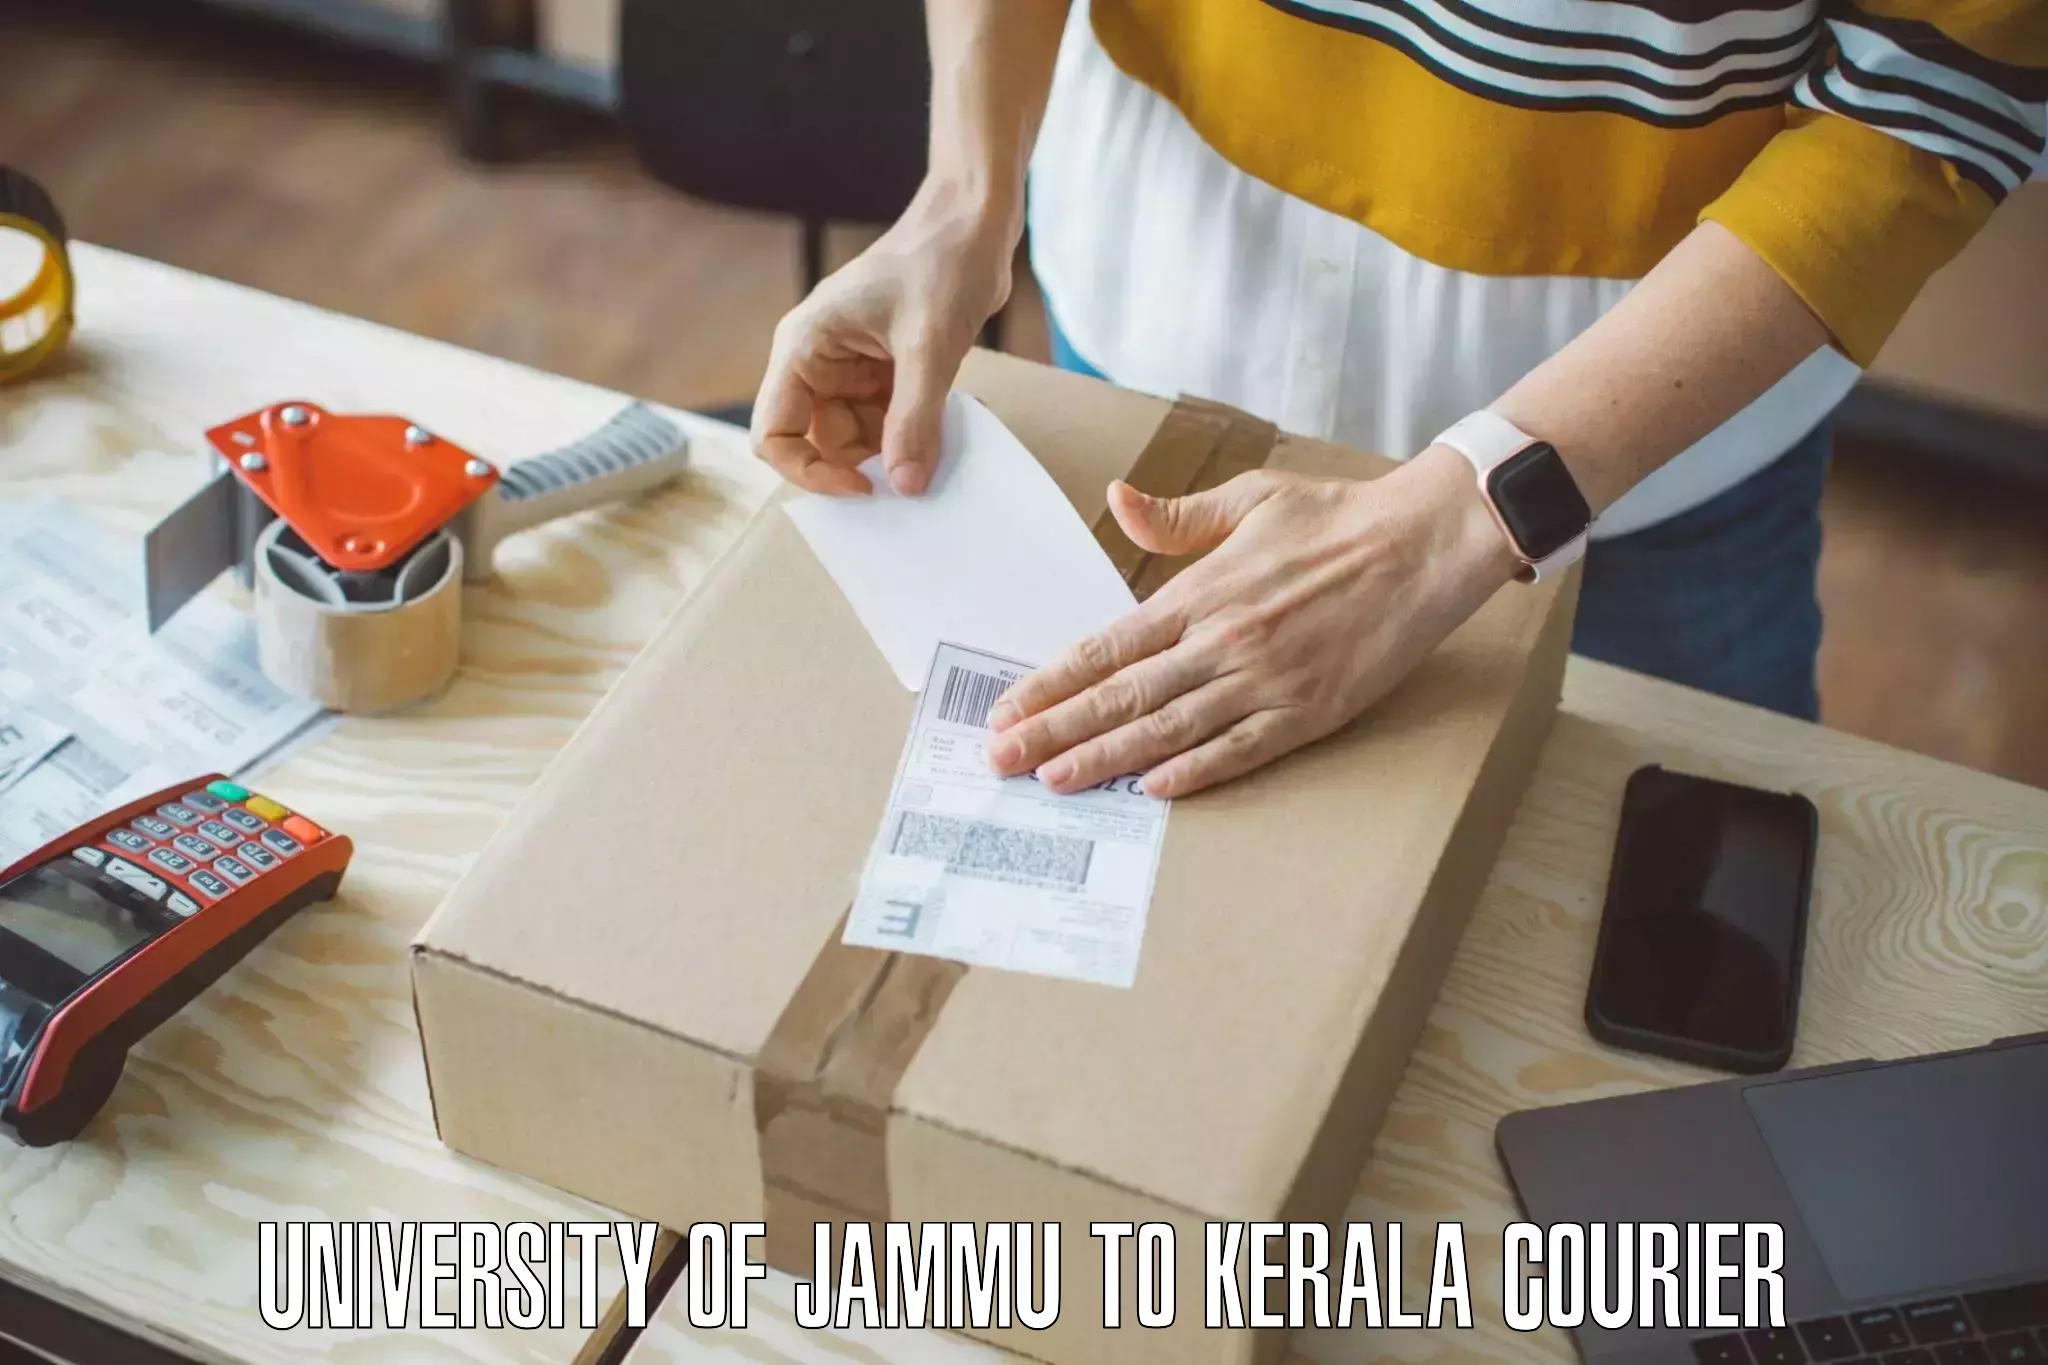 Skilled furniture transporters University of Jammu to Kerala